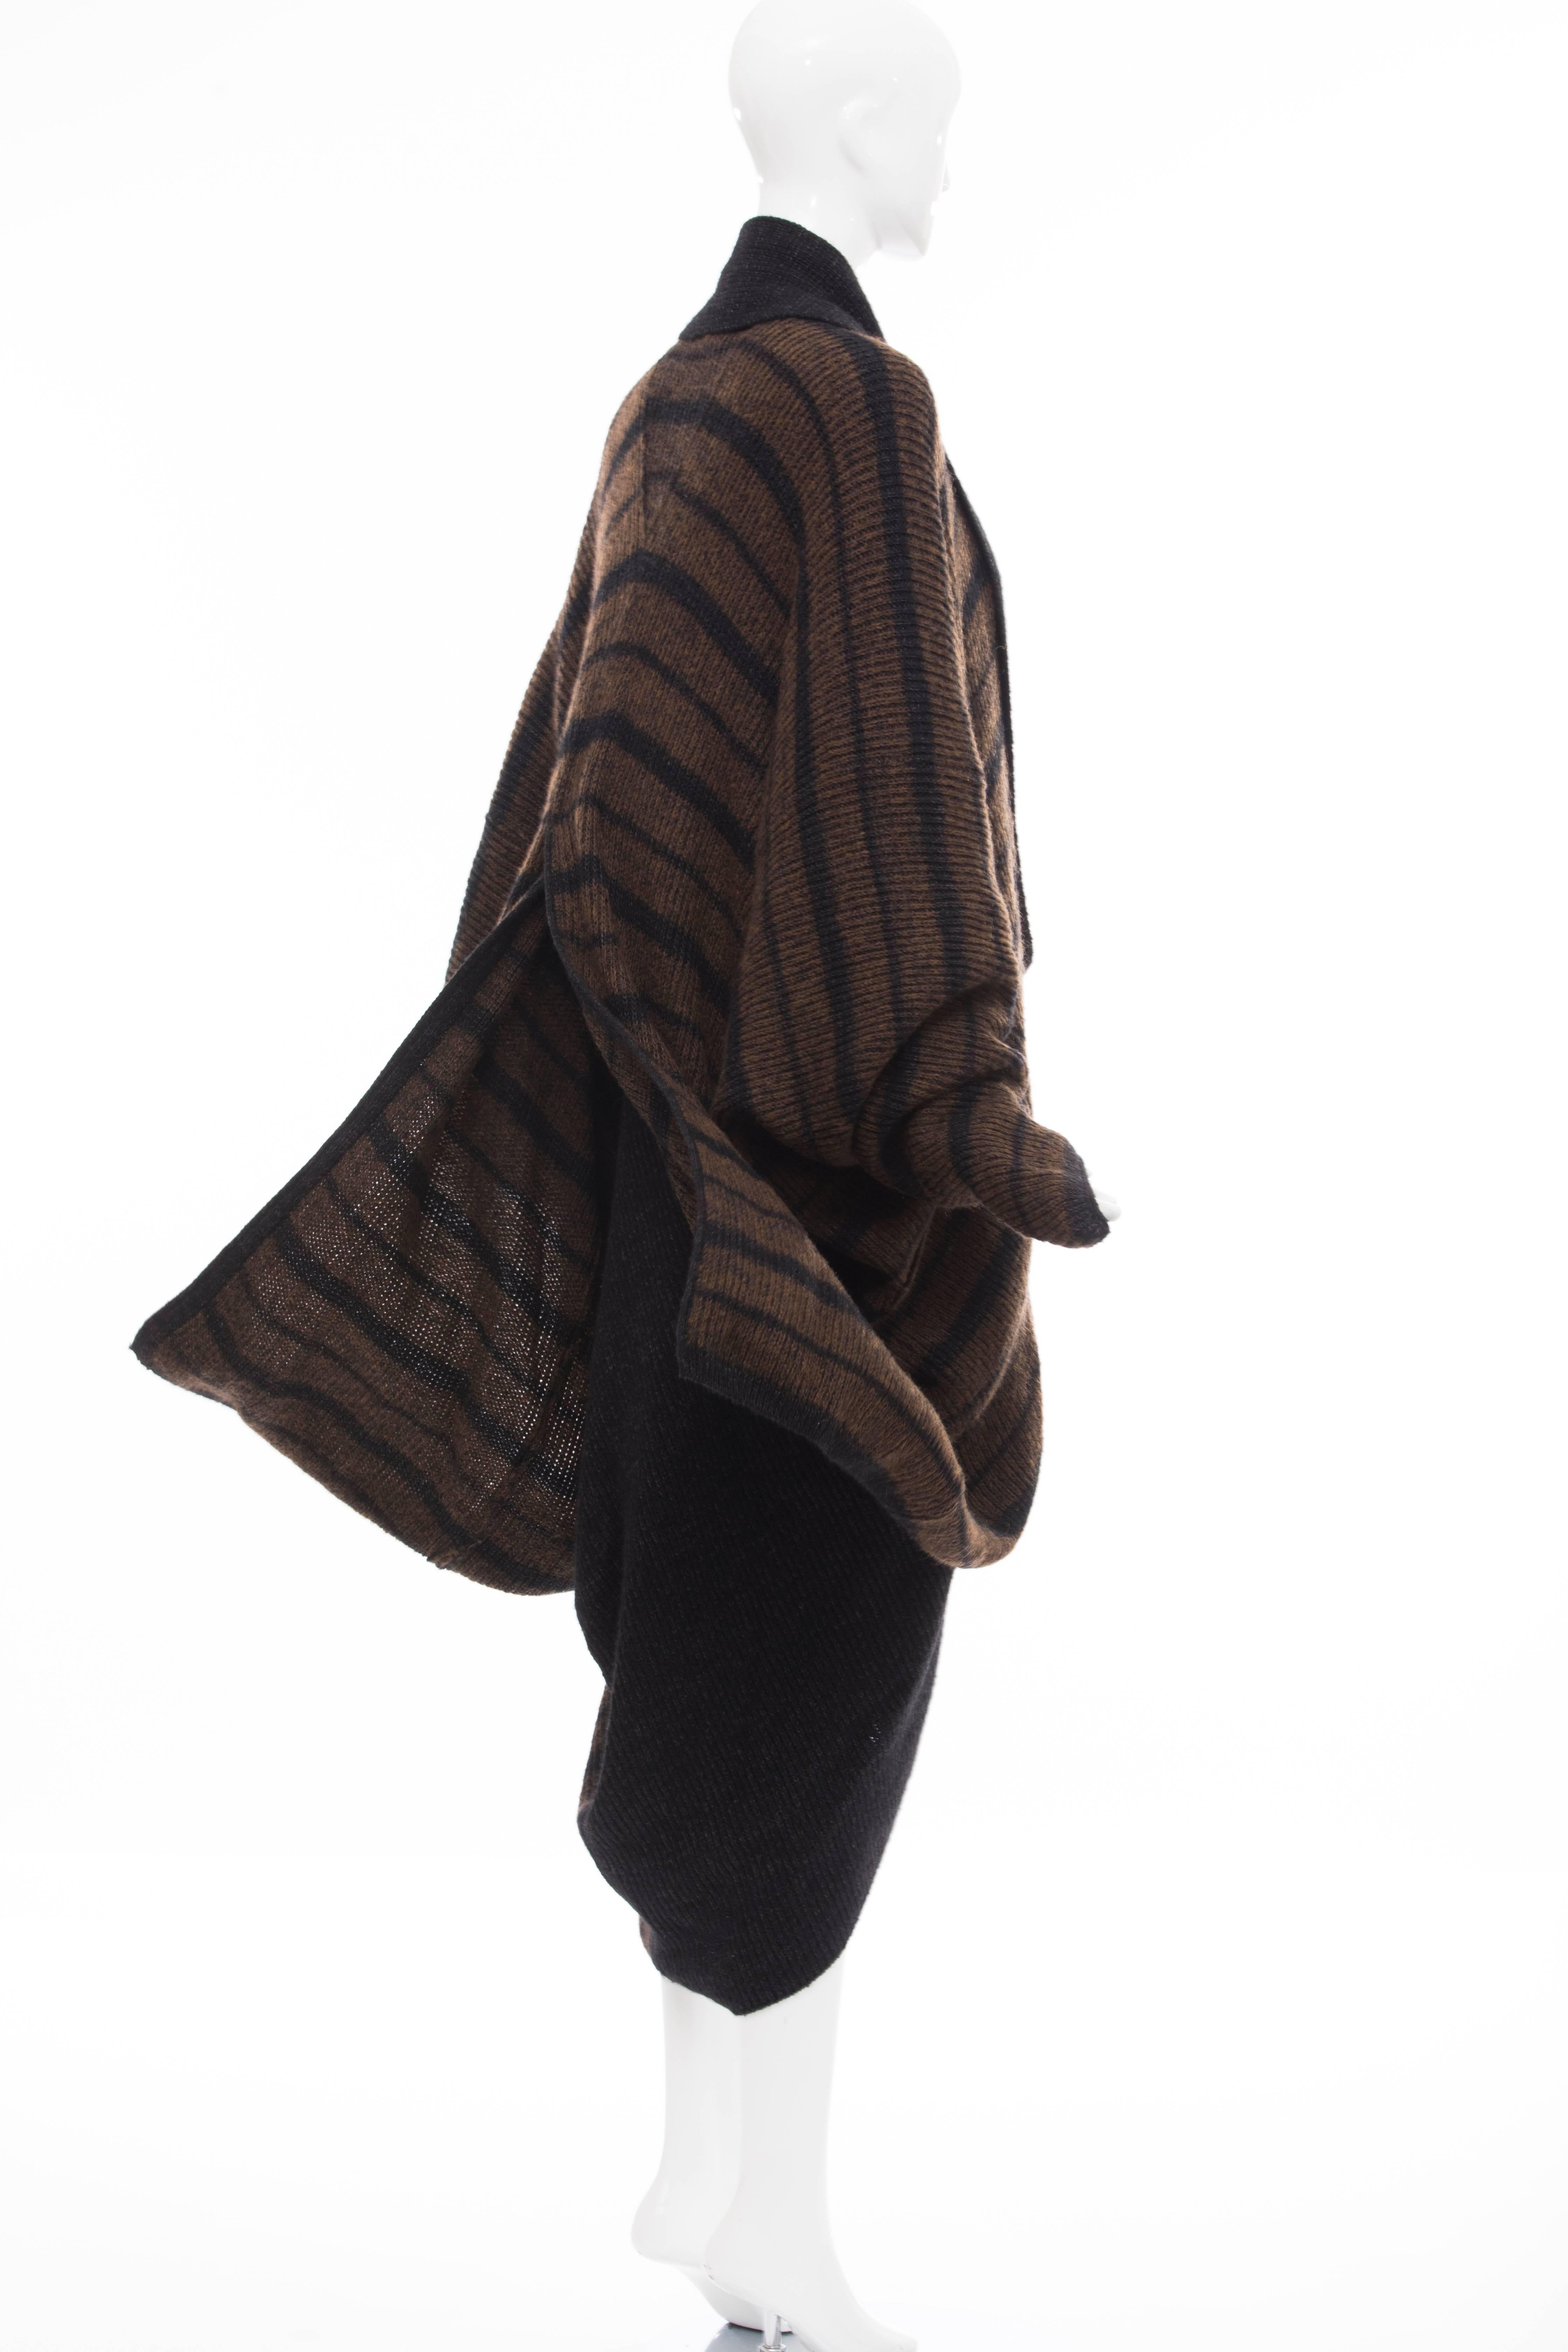 Issey Miyake Striped Wool Sweater Dress Cocoon Cardigan Ensemble, Circa ...